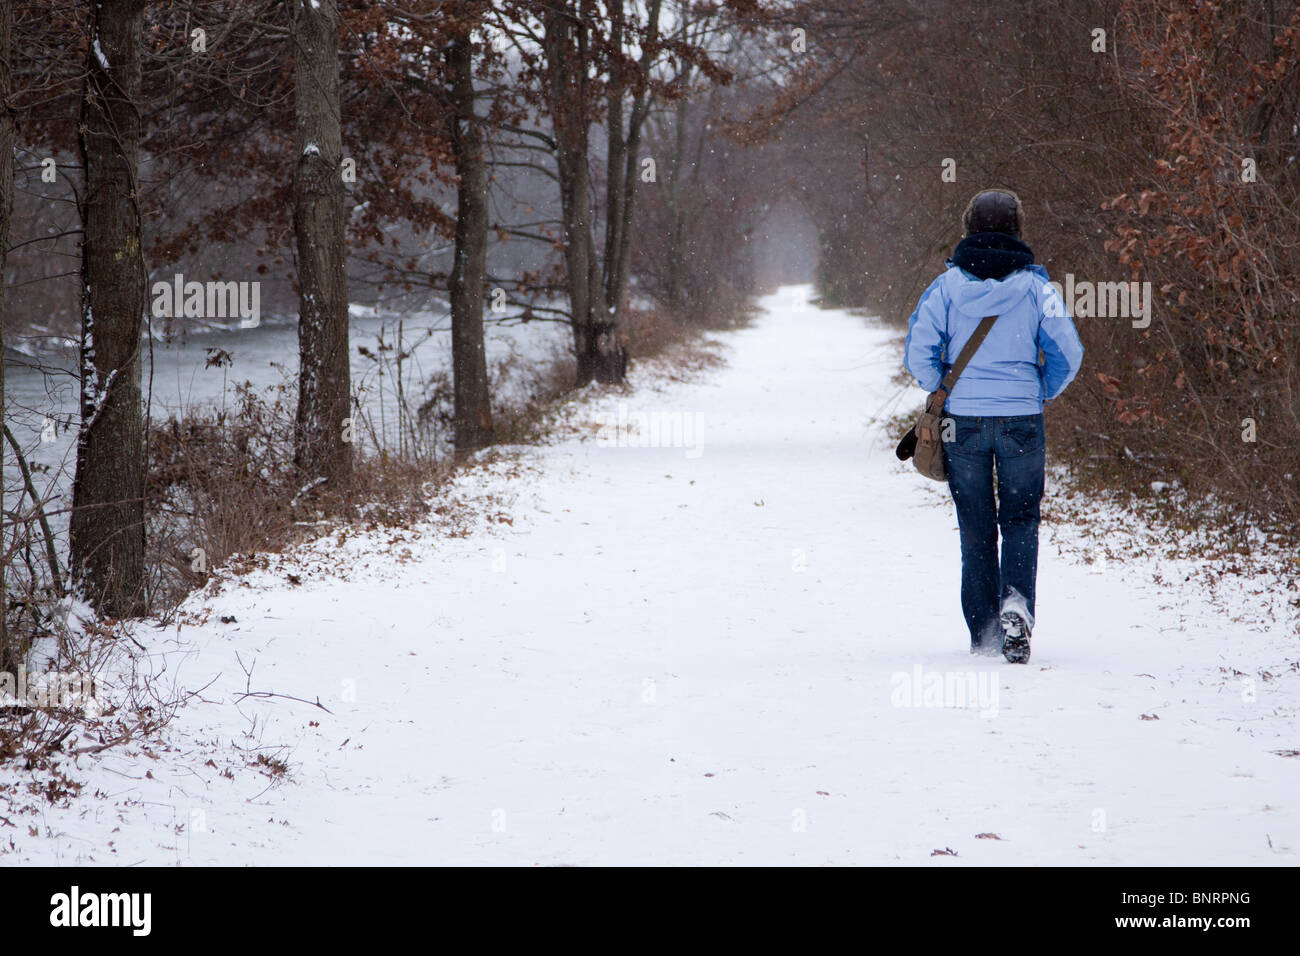 A woman walking beside a snowy riverside path in freezing cold winter ...